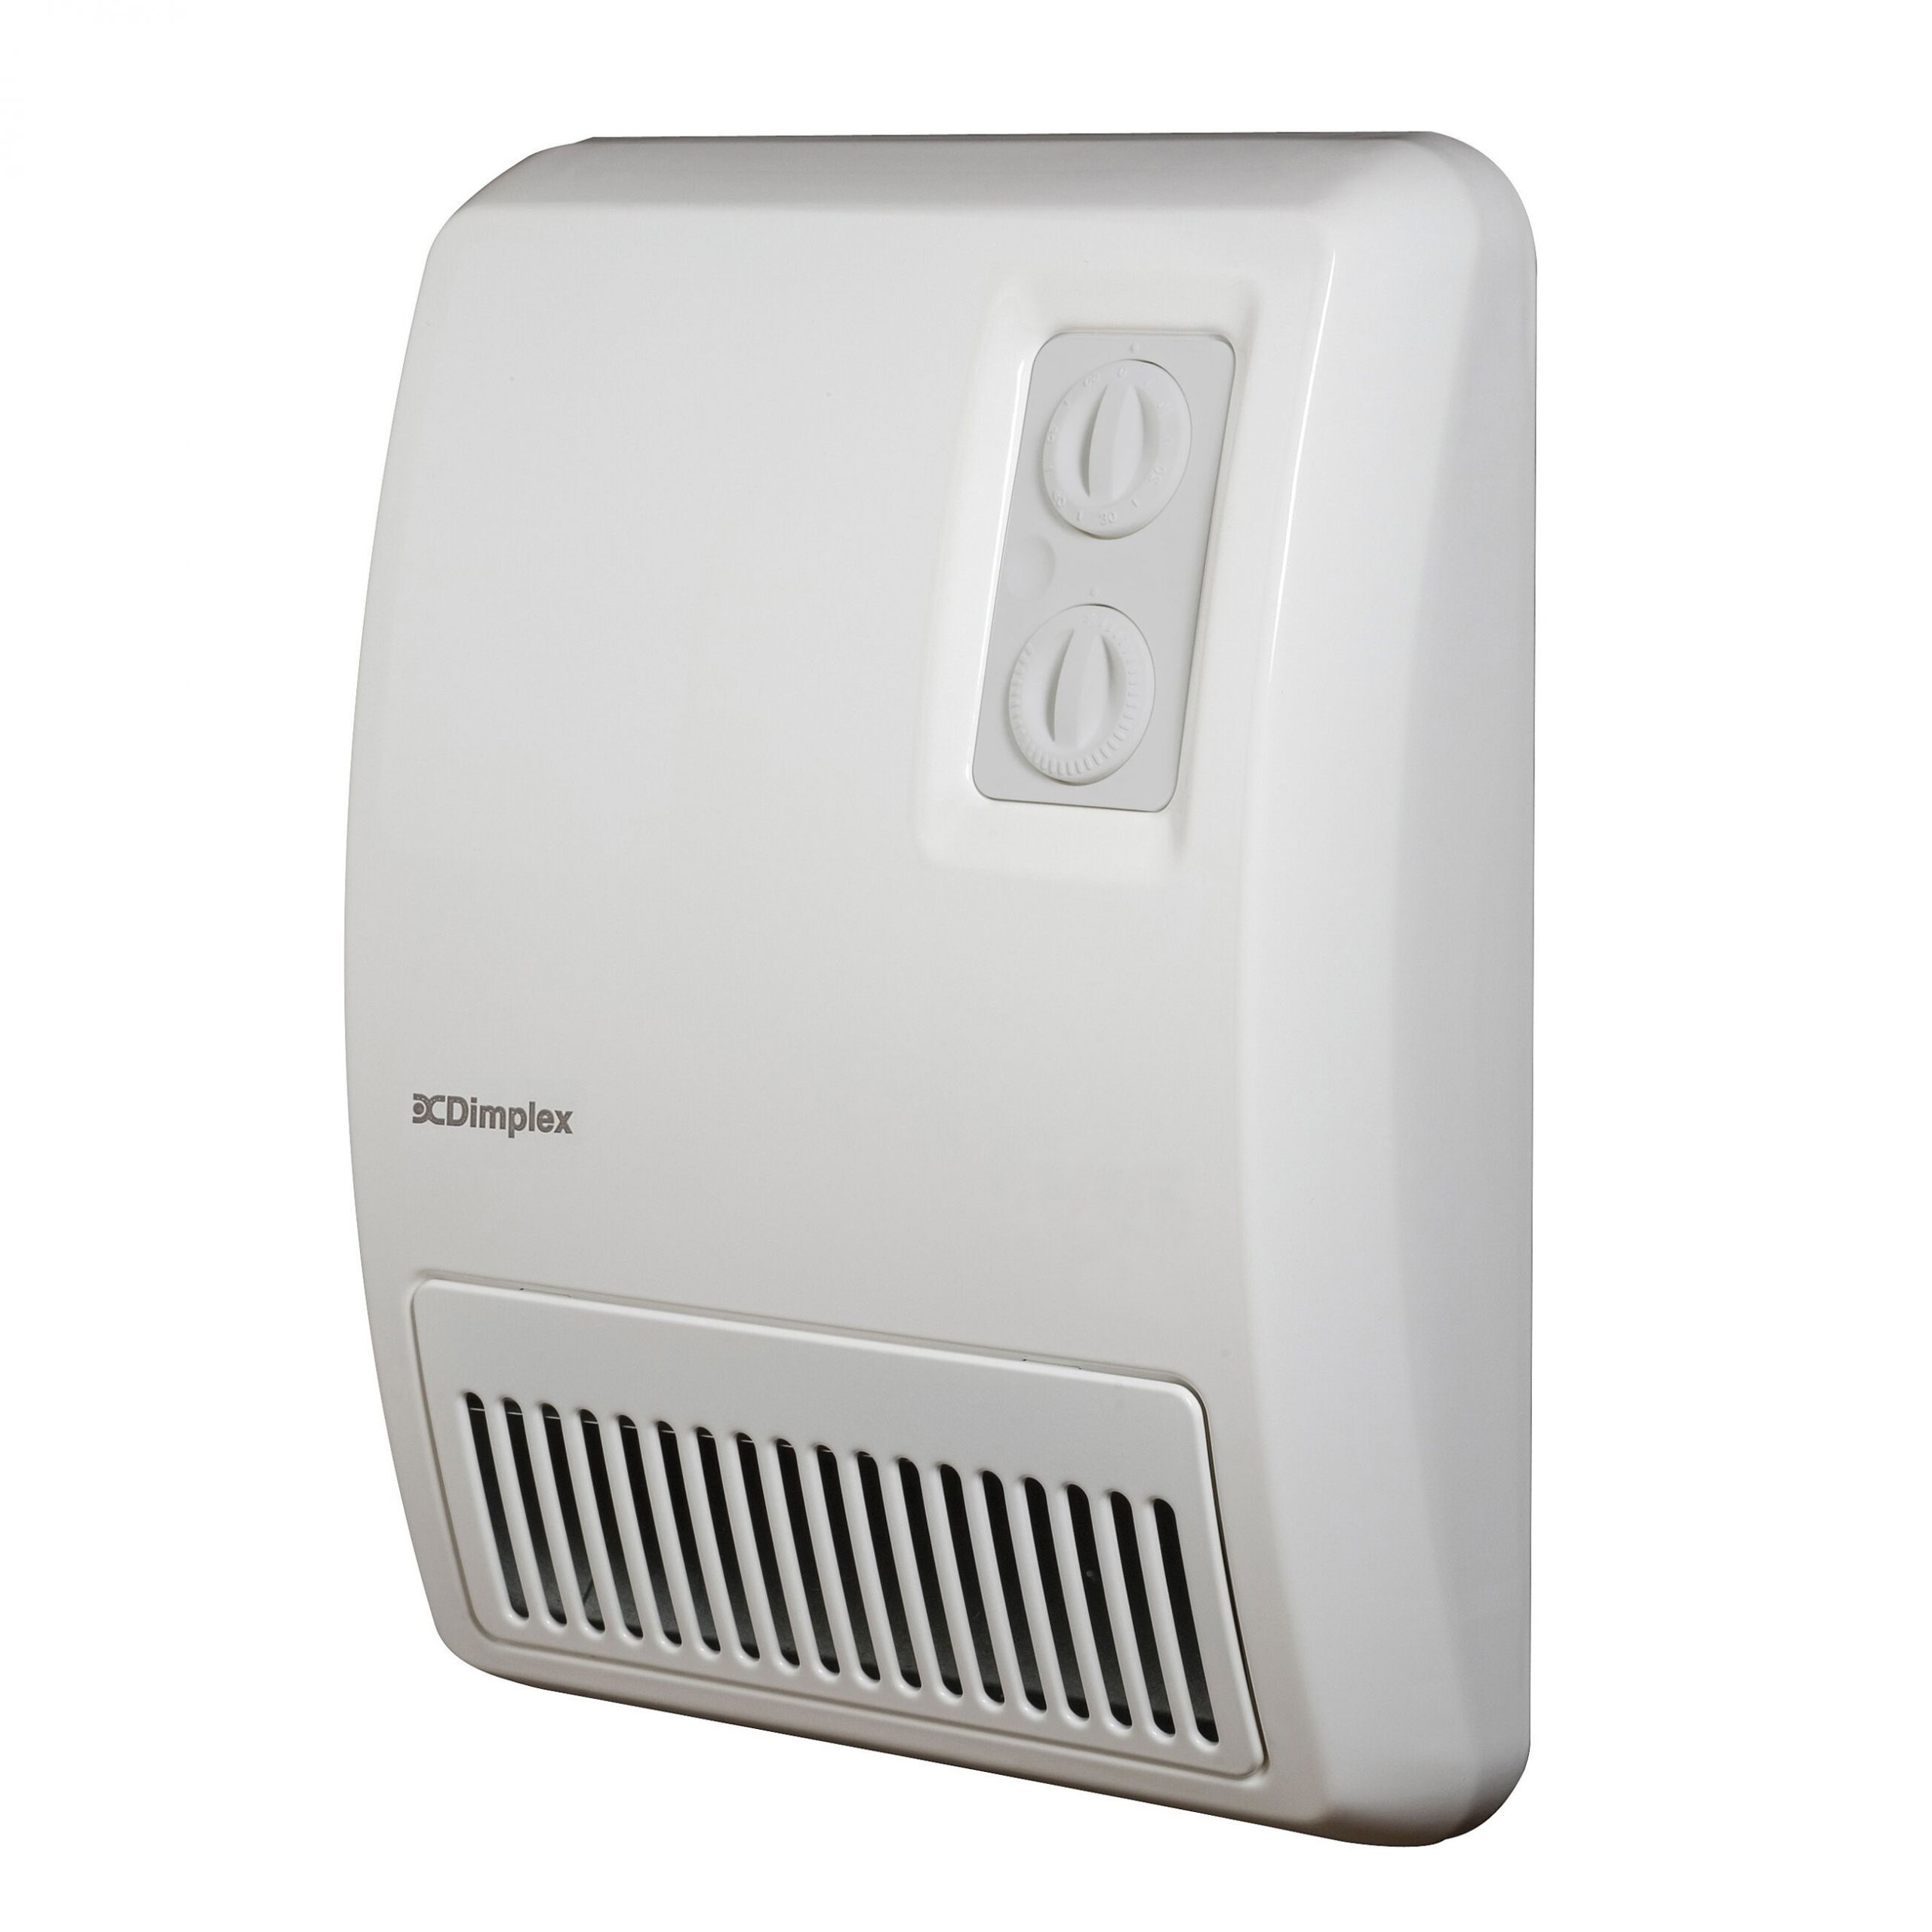 Bathroom Heater Wall Mounted
 Dimplex 3 413 BTU Wall Insert Electric Fan Heater